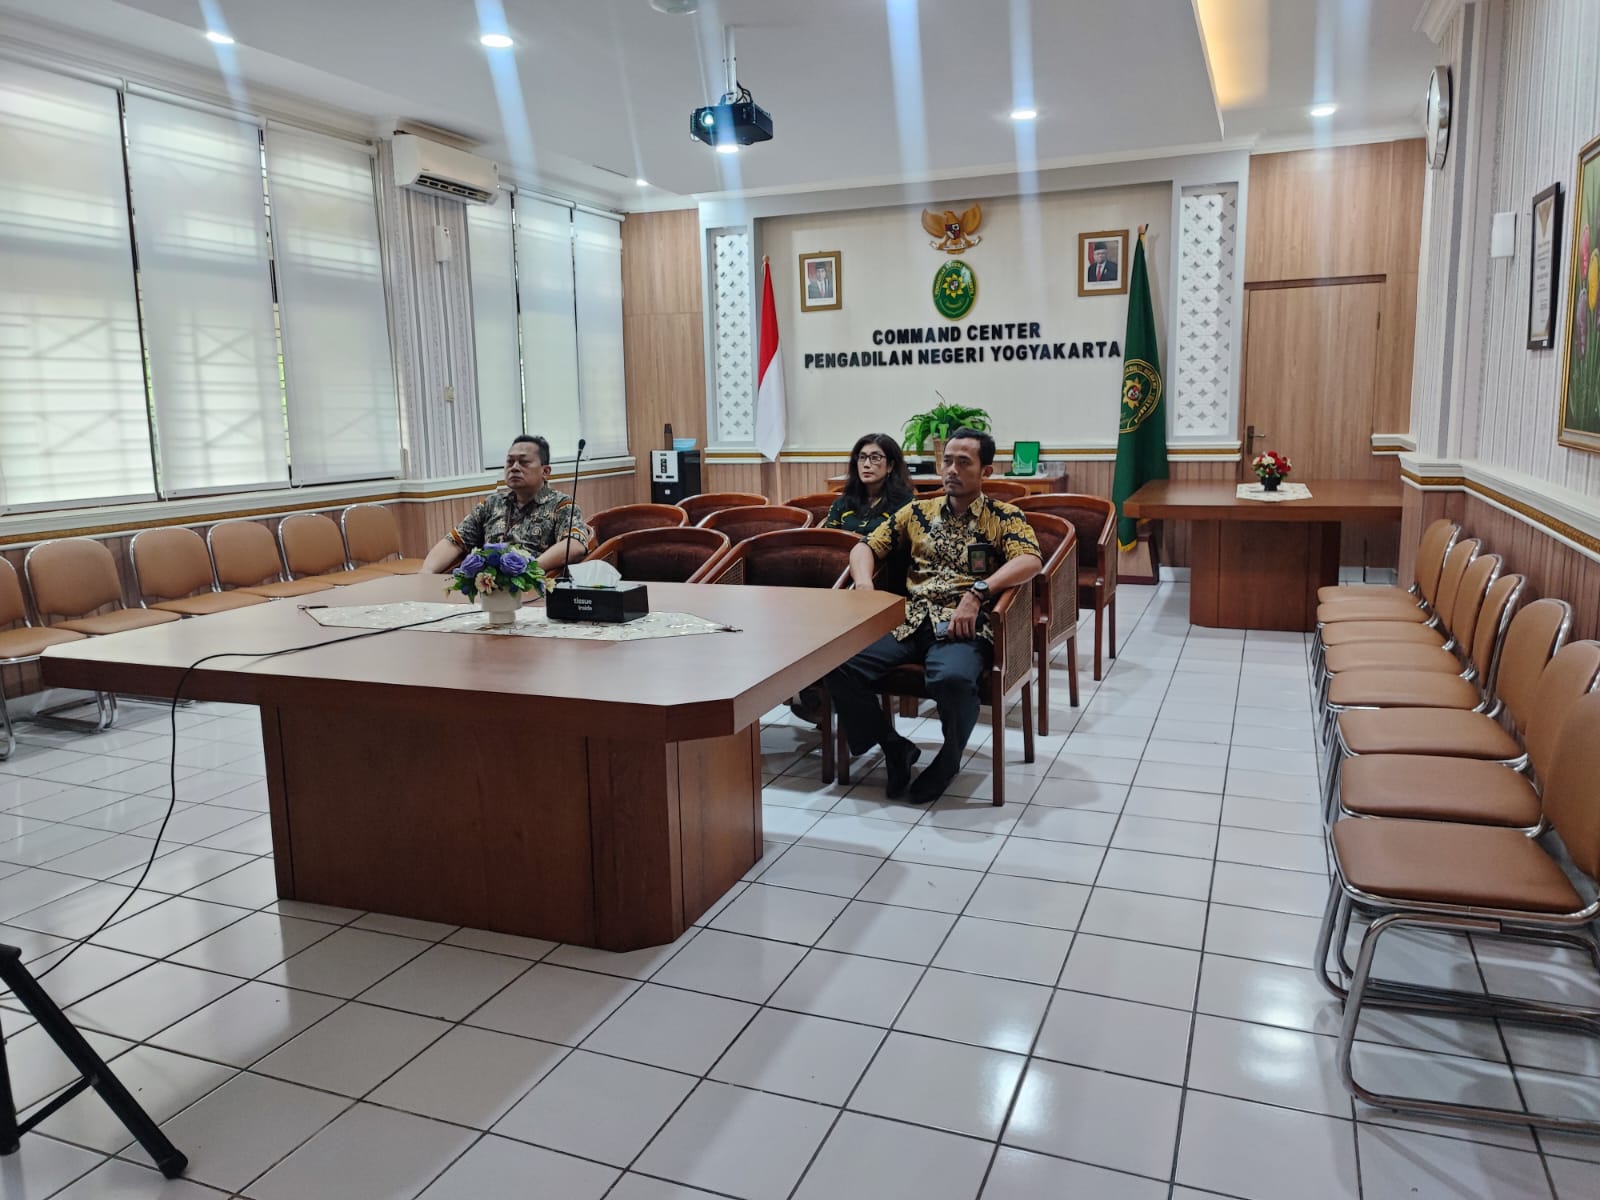 Pengadilan Negeri Yogyakarta Mengikuti Sosialisasi Jaminan Kesehatan Hakim